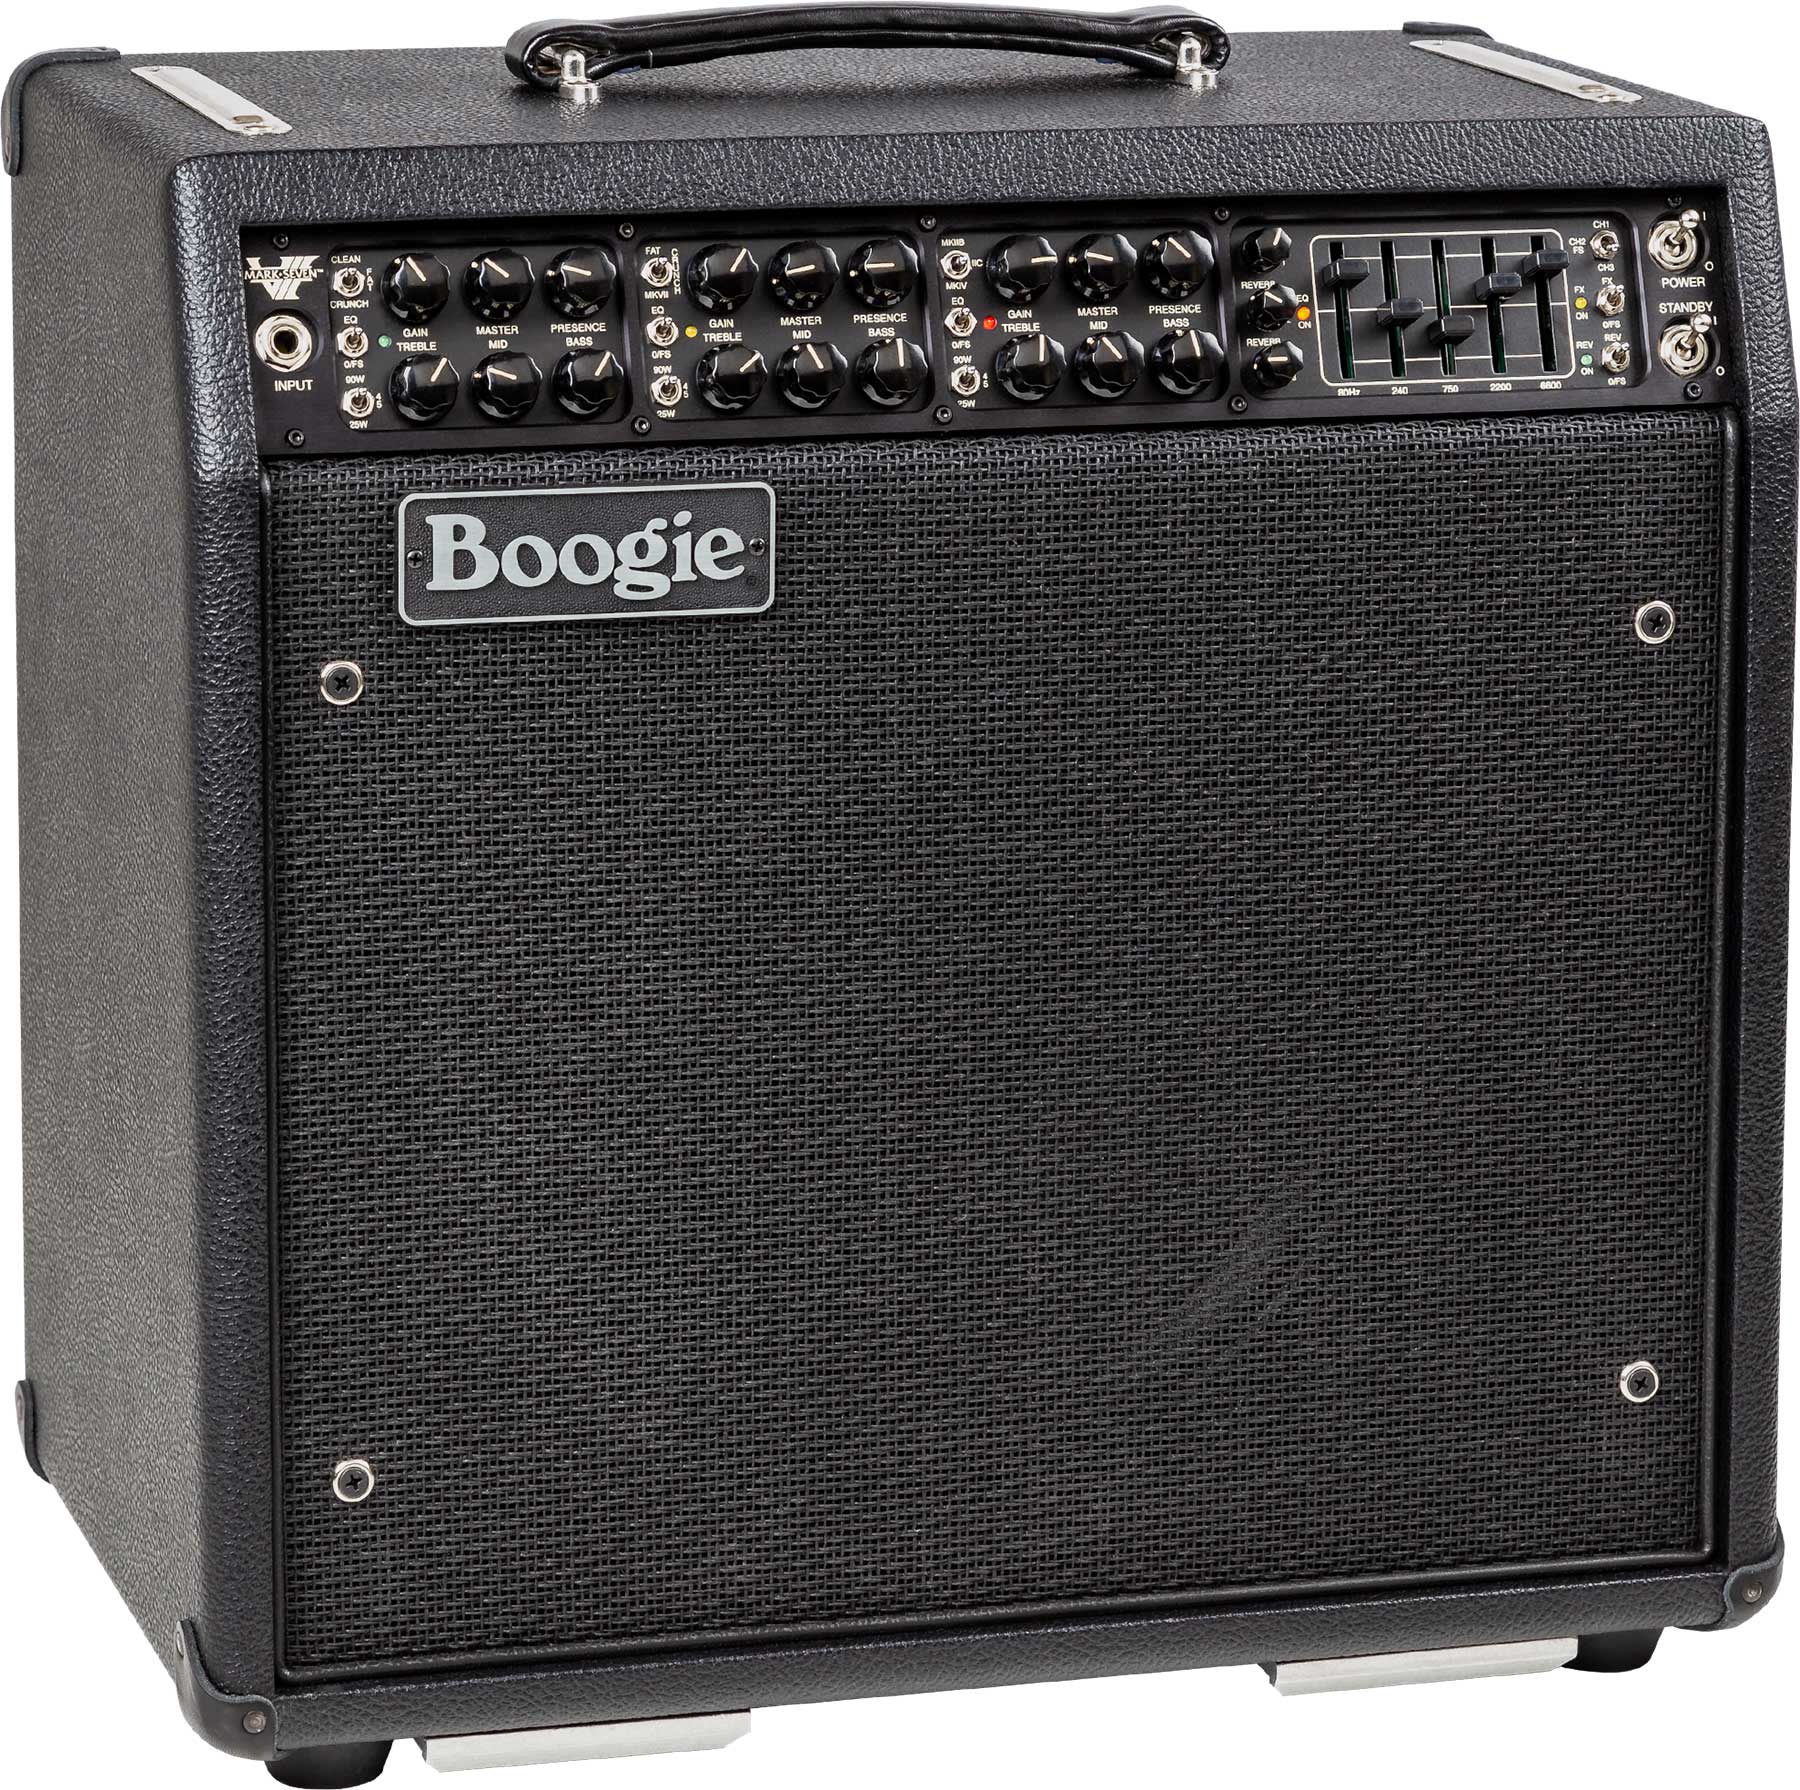 Mesa Boogie Mark Vii 1x12 Combo 25/45/90w 6l6 Black - Combo amplificador para guitarra eléctrica - Variation 1